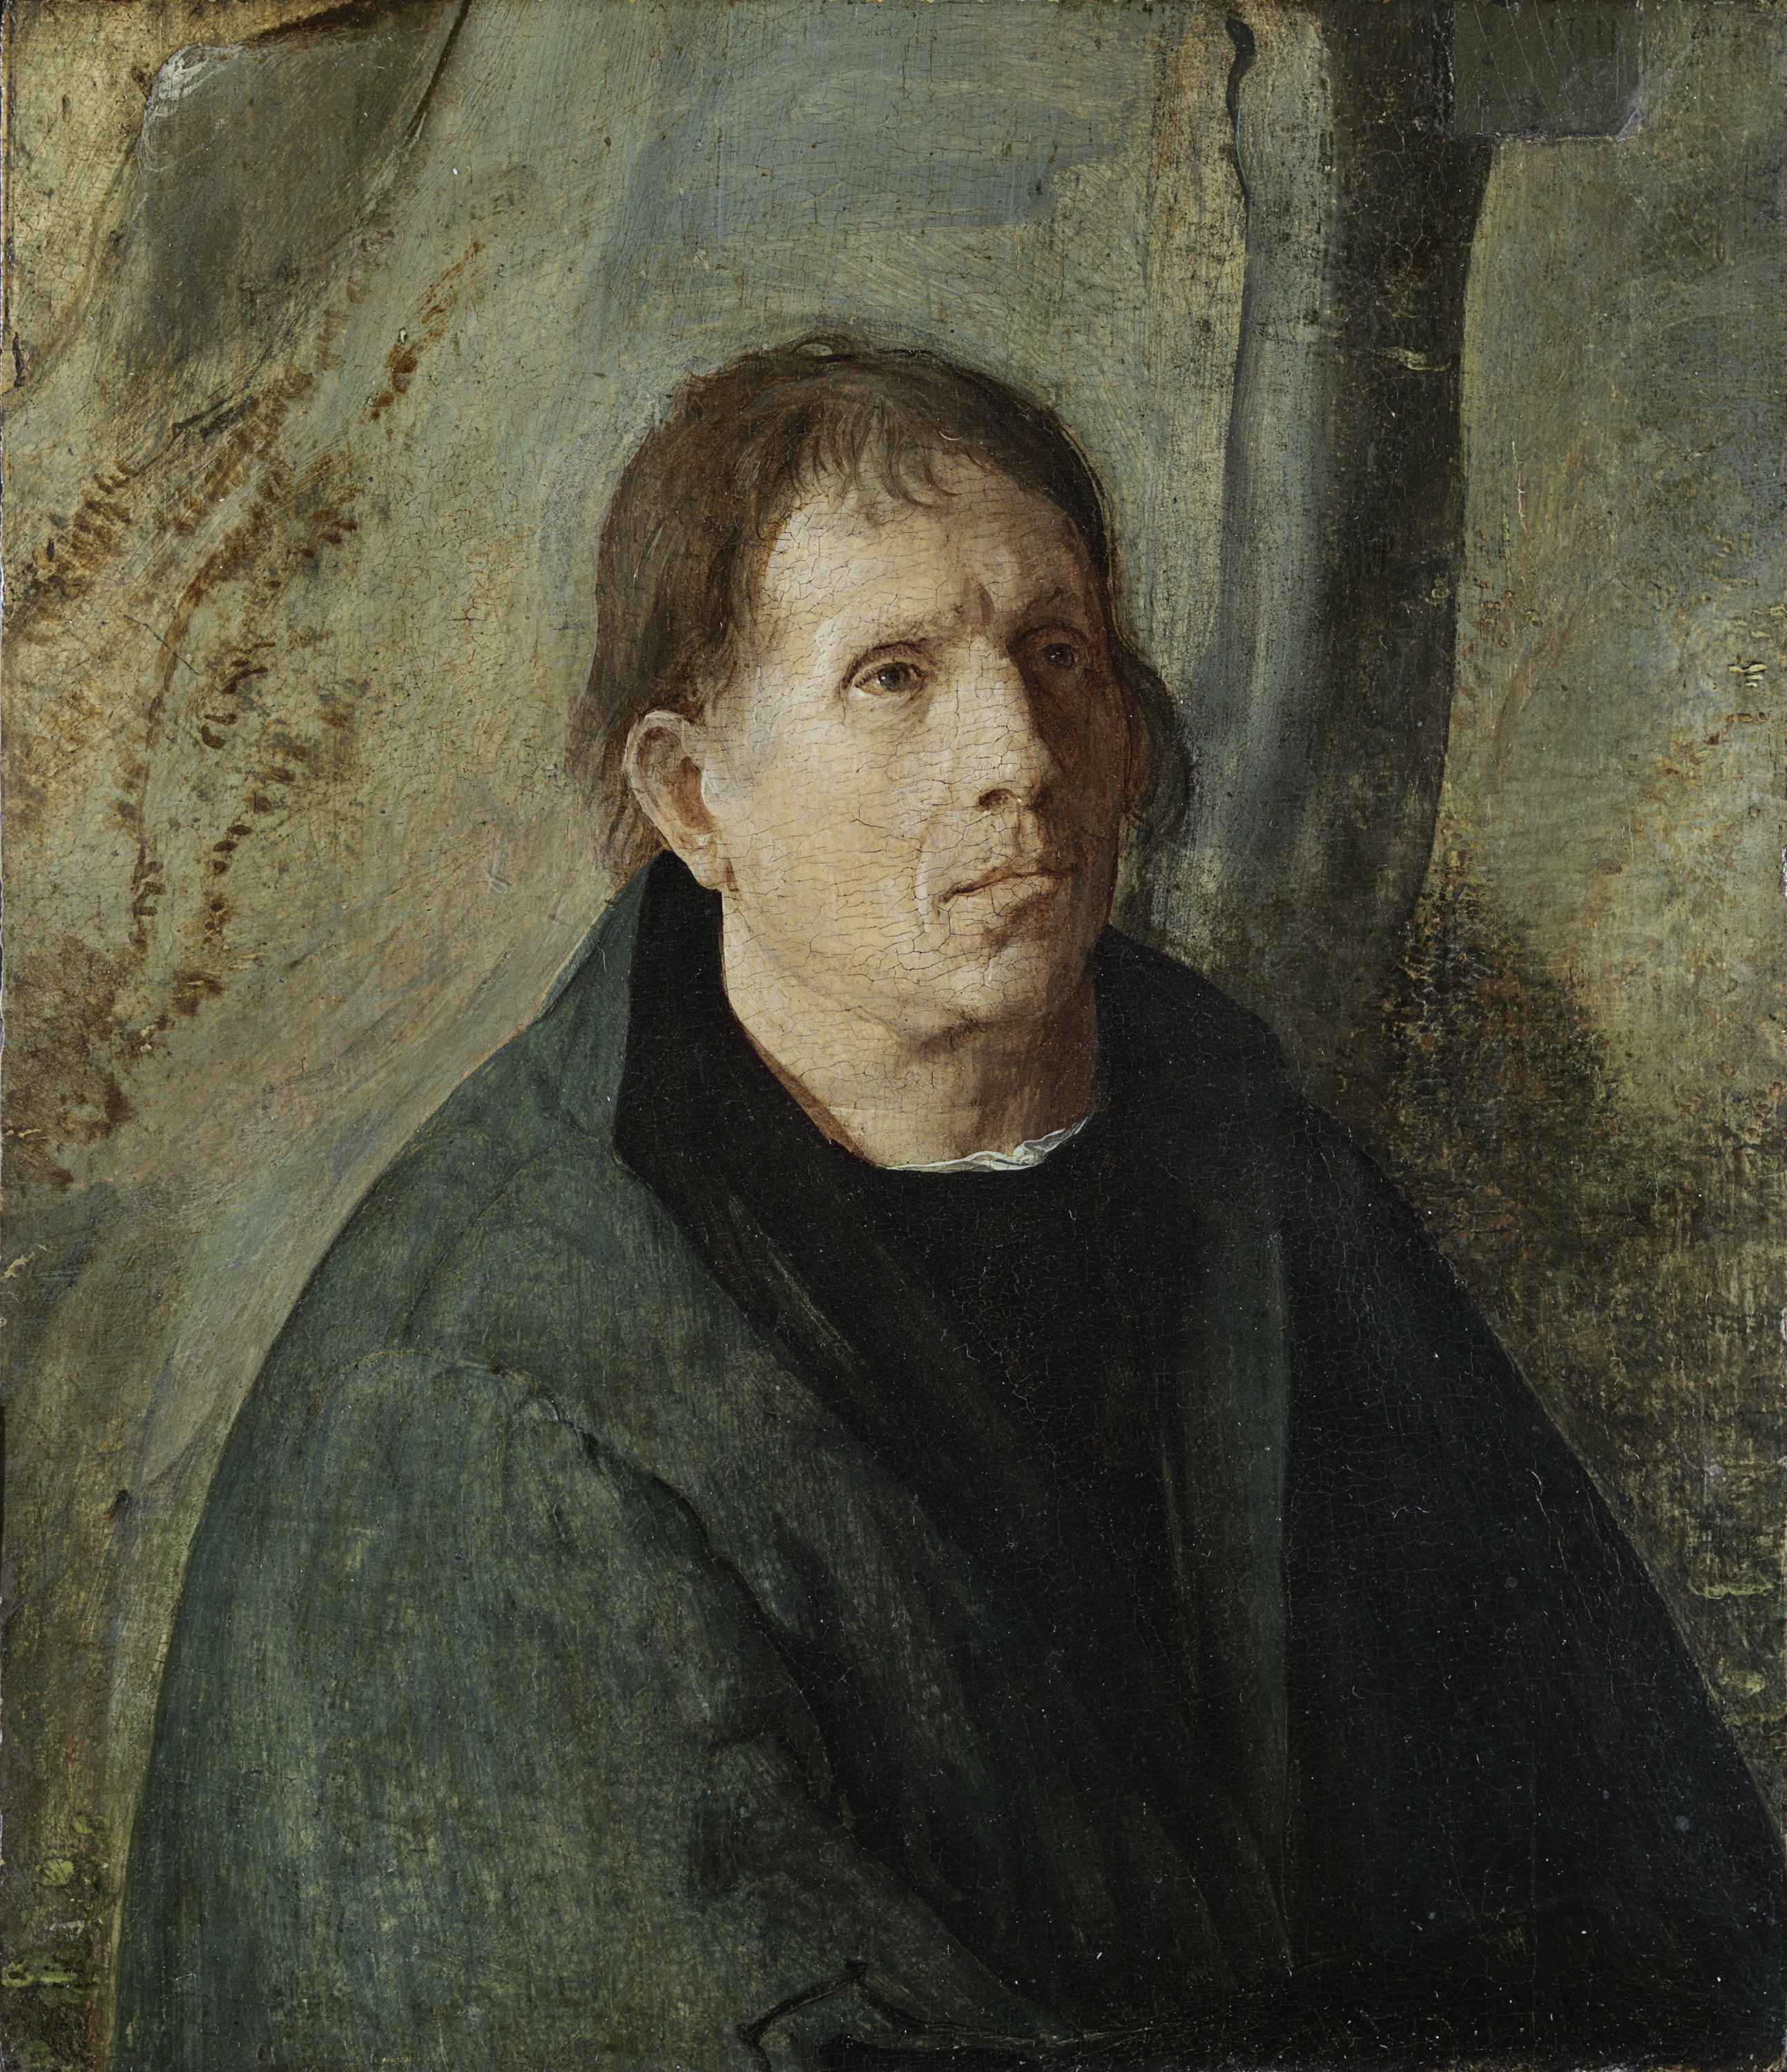 Portrait of a Donor. Retrato de un donante, c. 1530 (?)